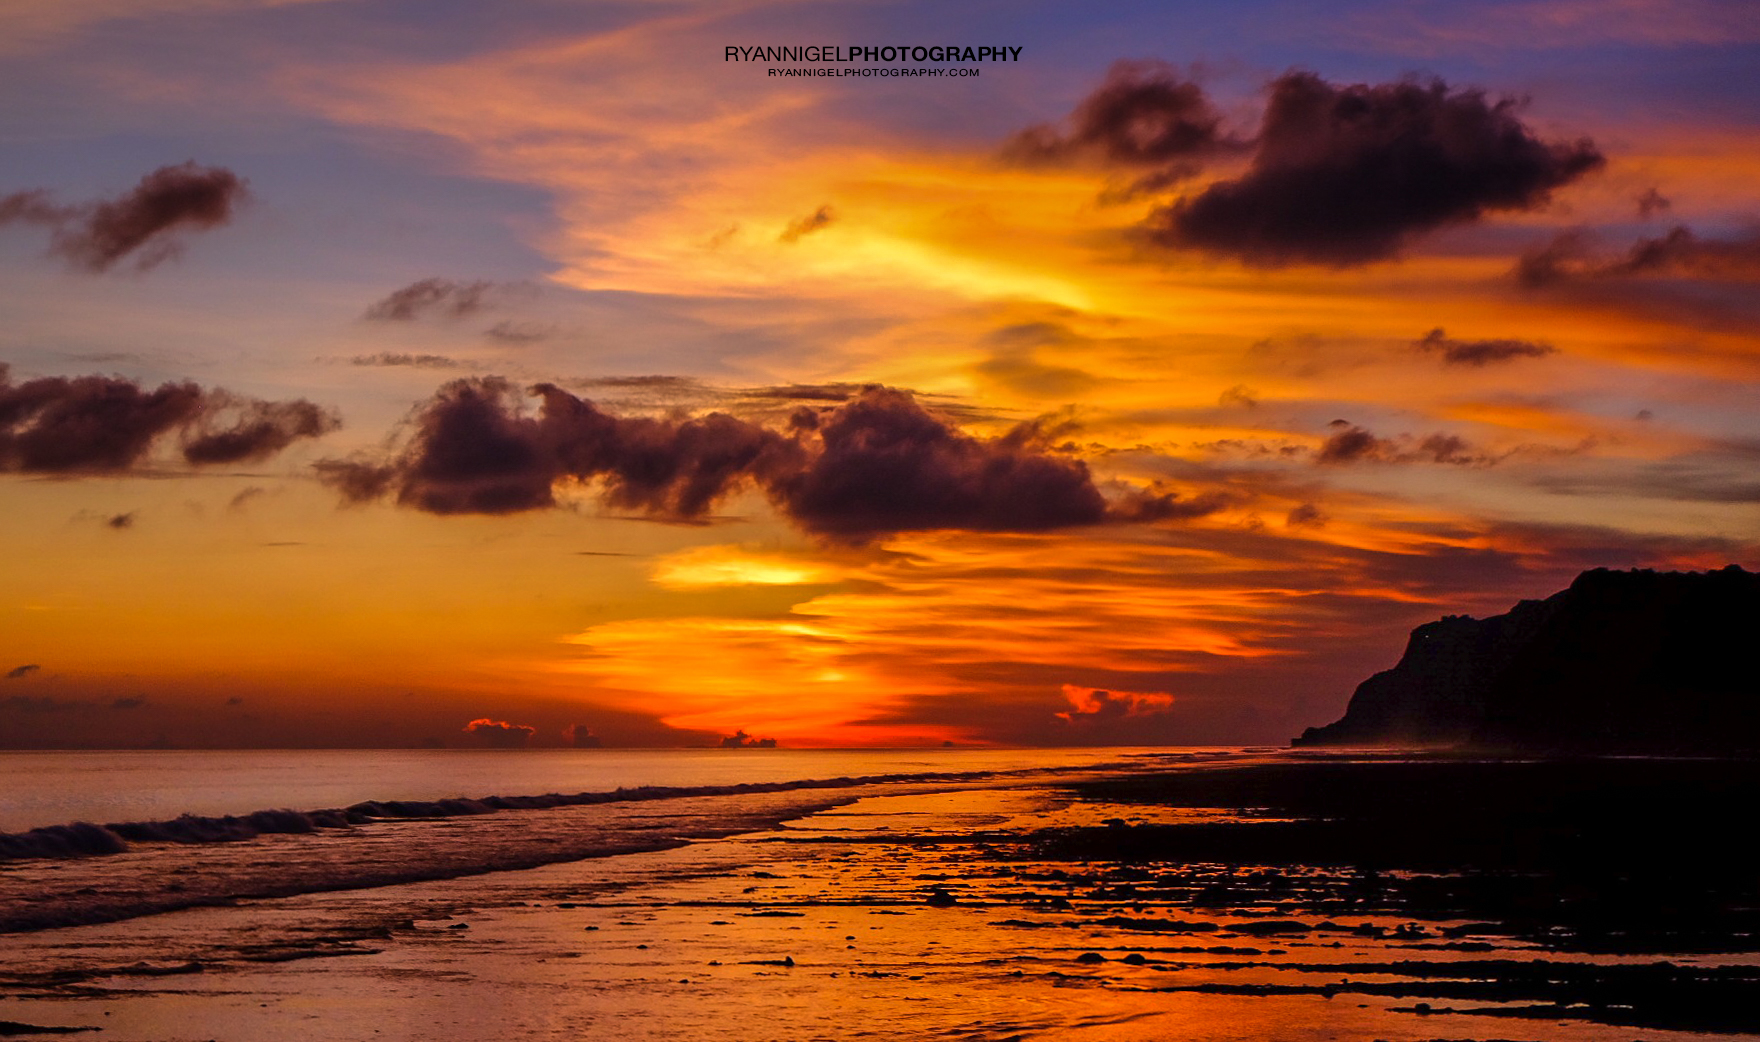 Sunset in Bali – ryannigelphotography.com